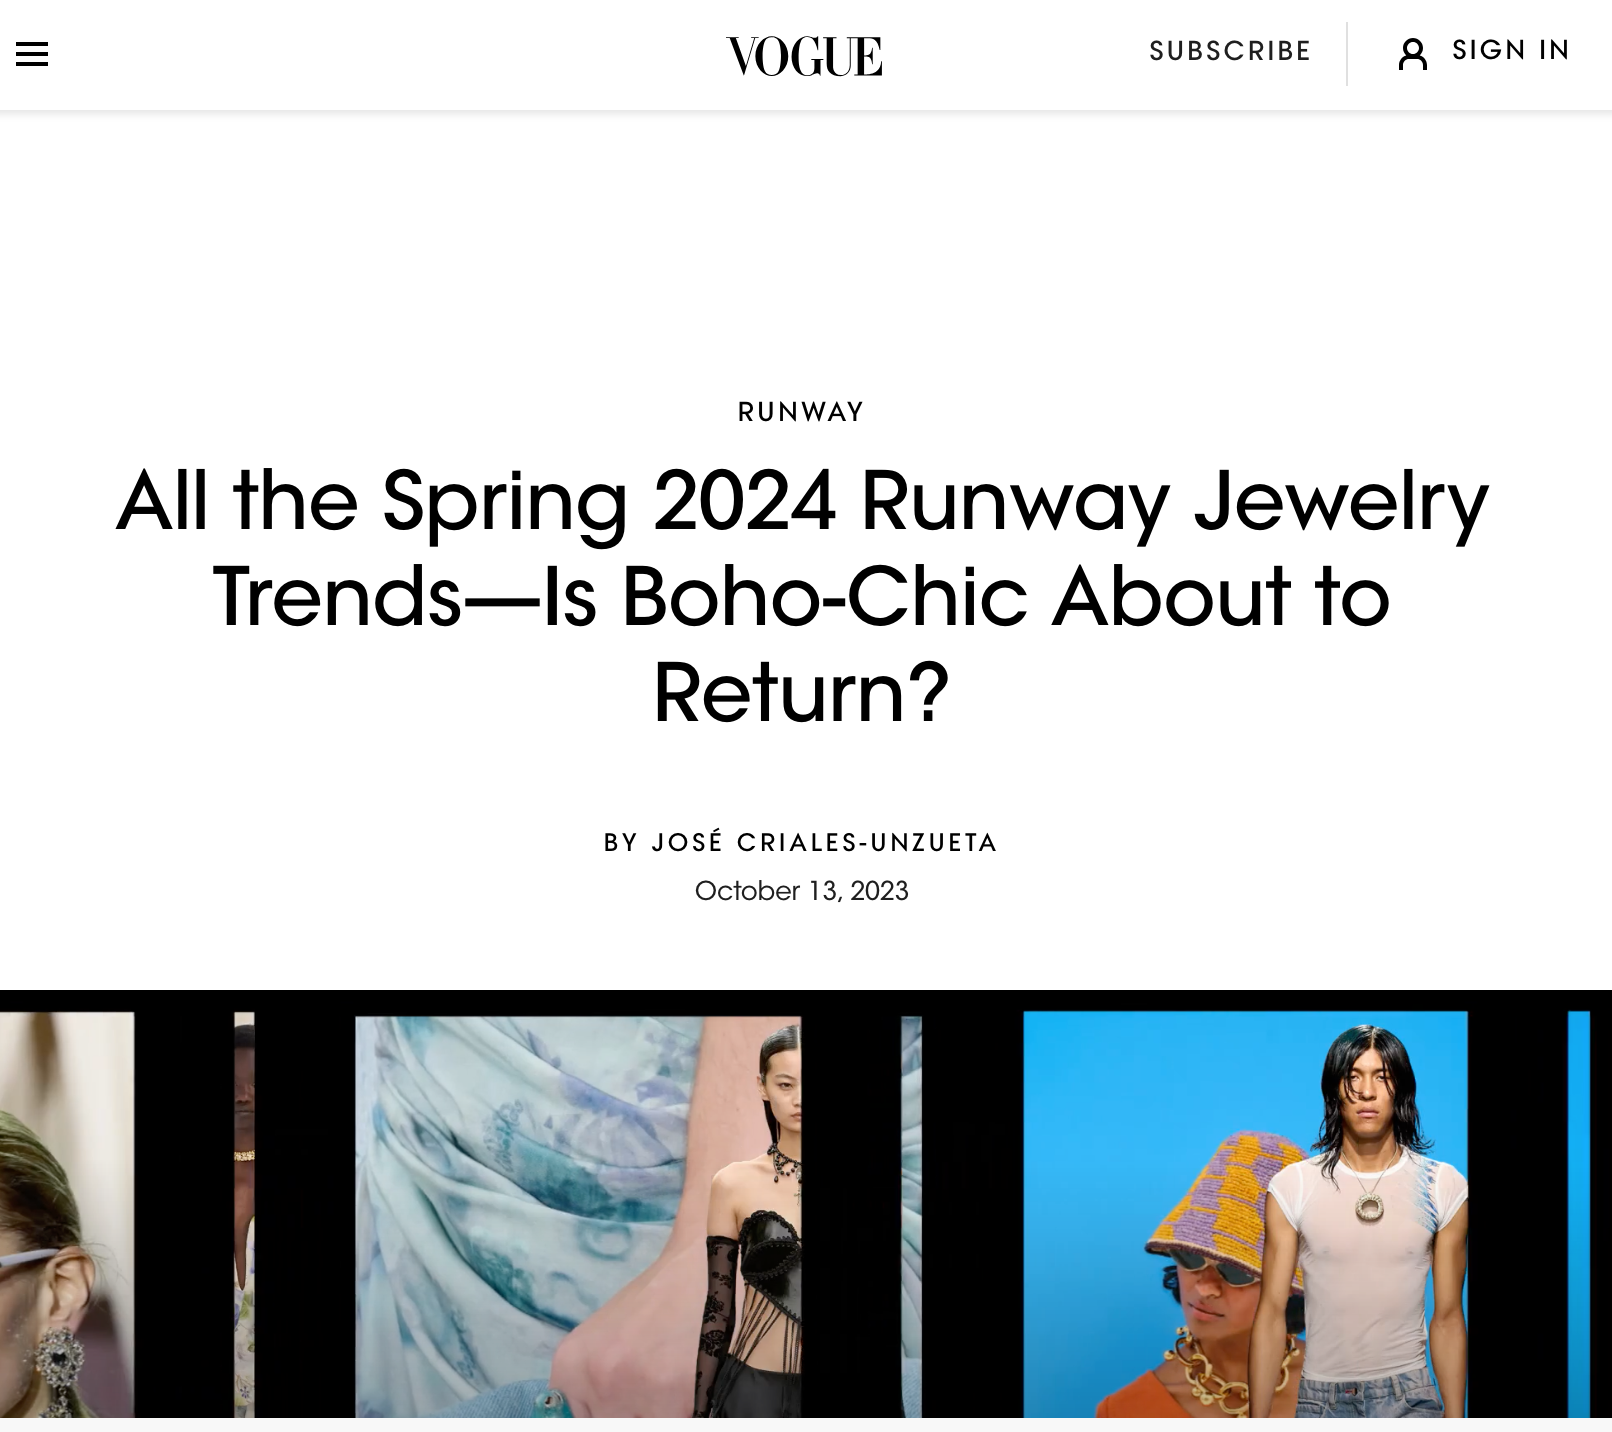 Vogue Jewelry Trends 2024